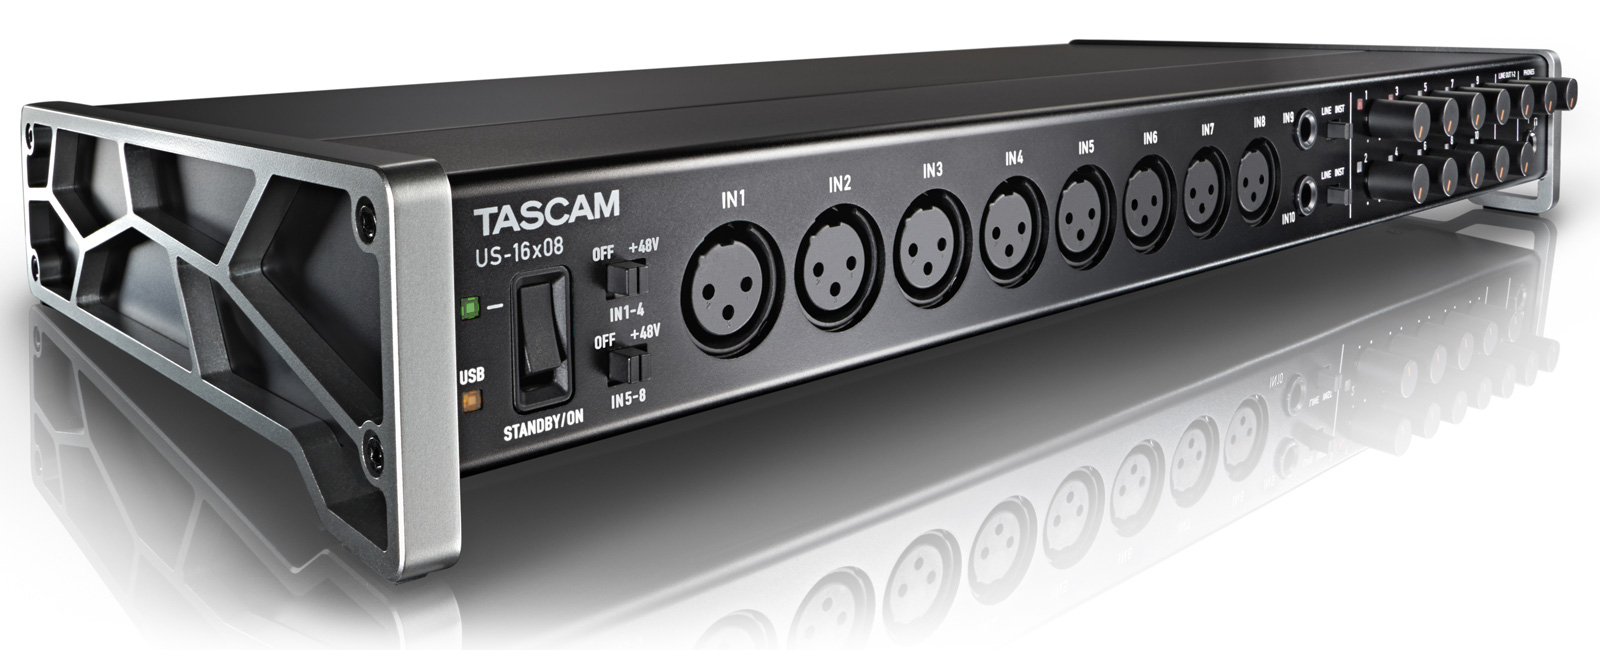 TASCAM Announces USB Audio Interface Driver Version 4.0 for Windows